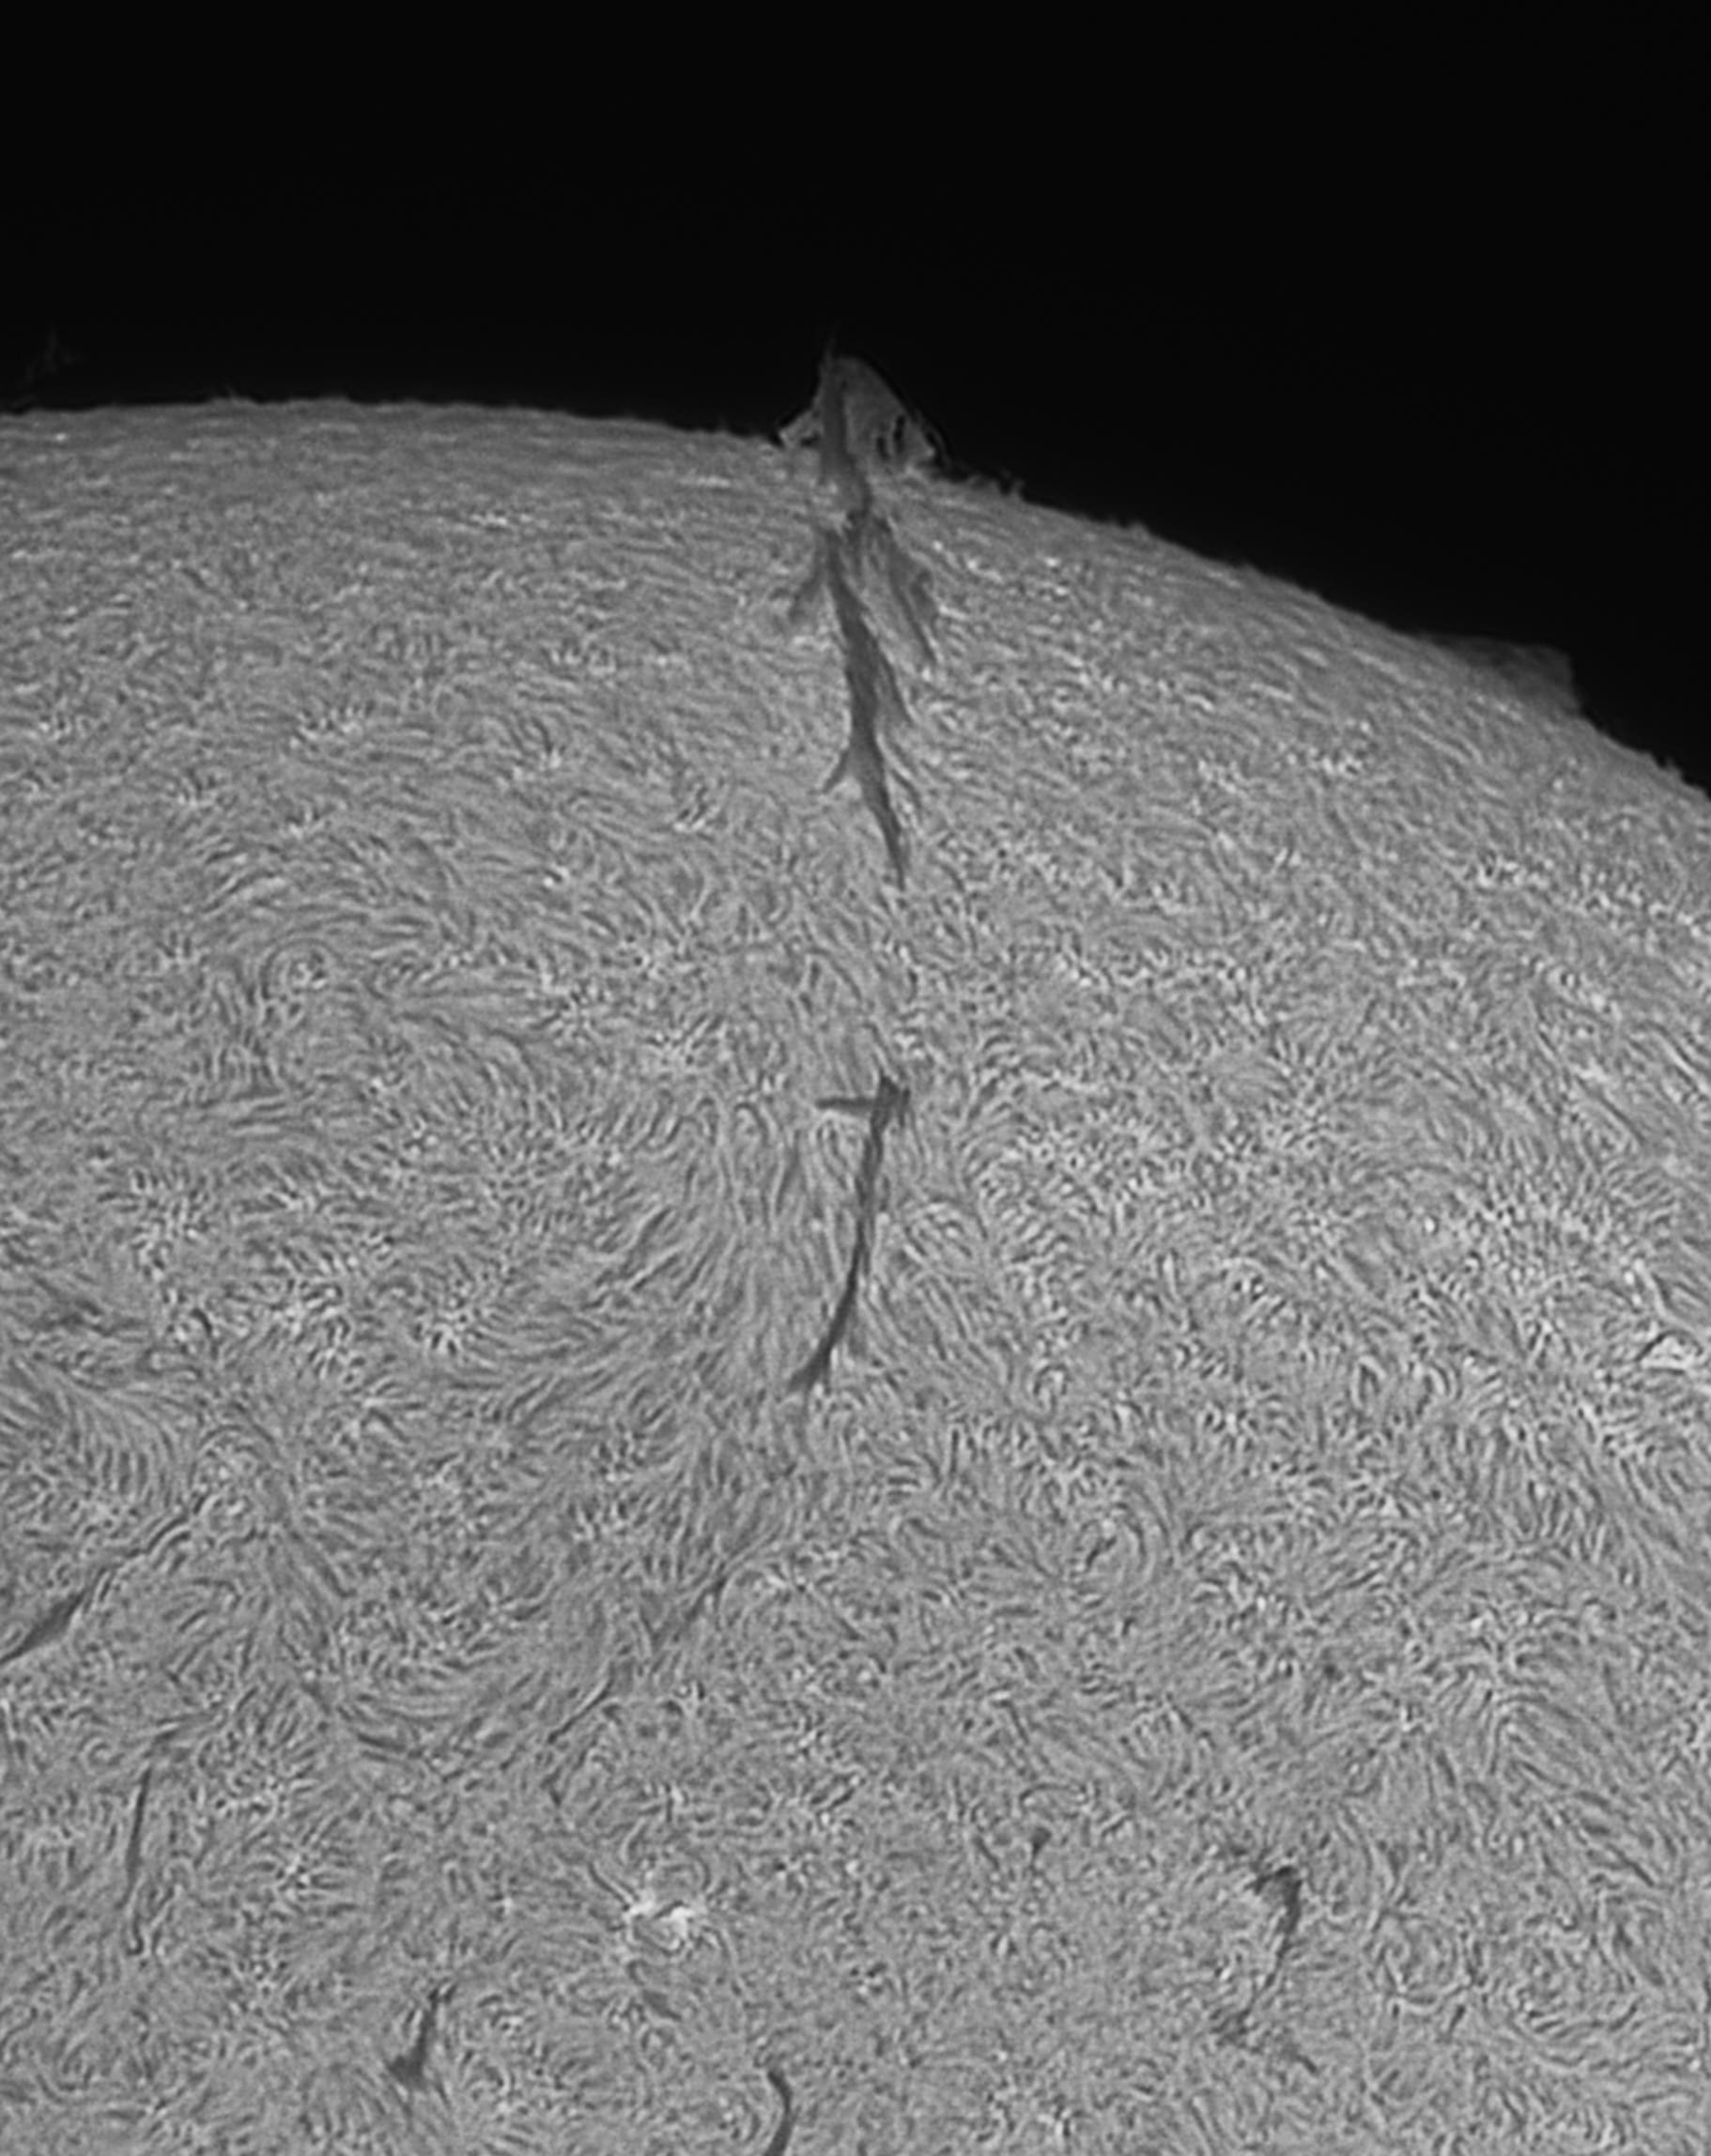 Filament am Südostrand der Sonne (5. September 2023)